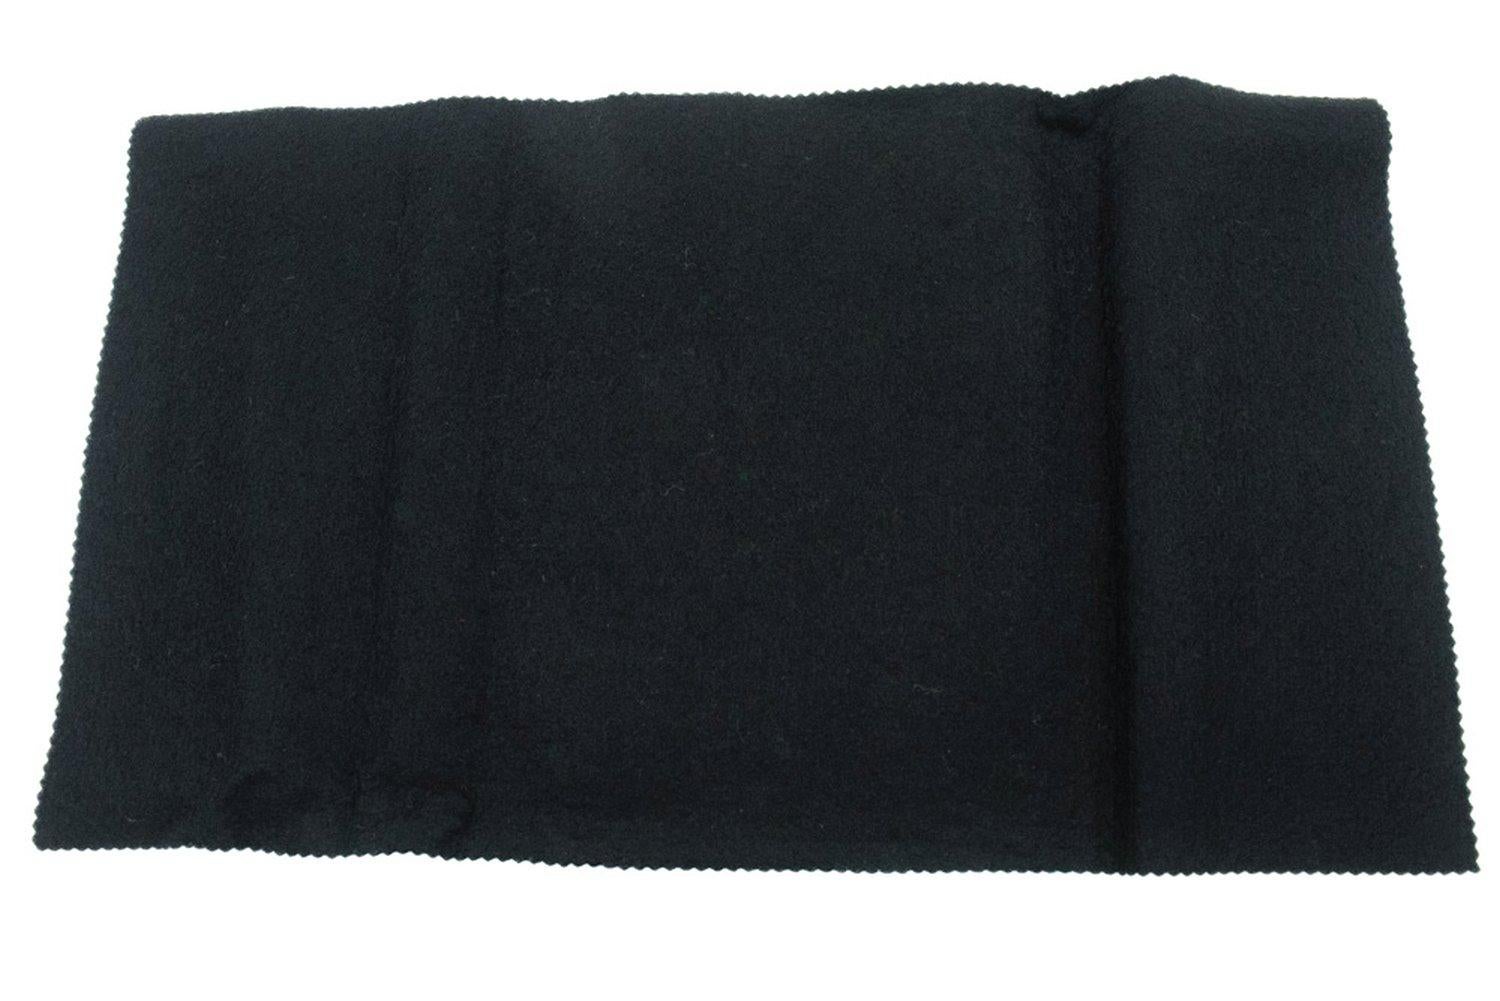 CHANEL Boy Black Caviar WOC Wallet On Chain Flap Shoulder Bag SV 15